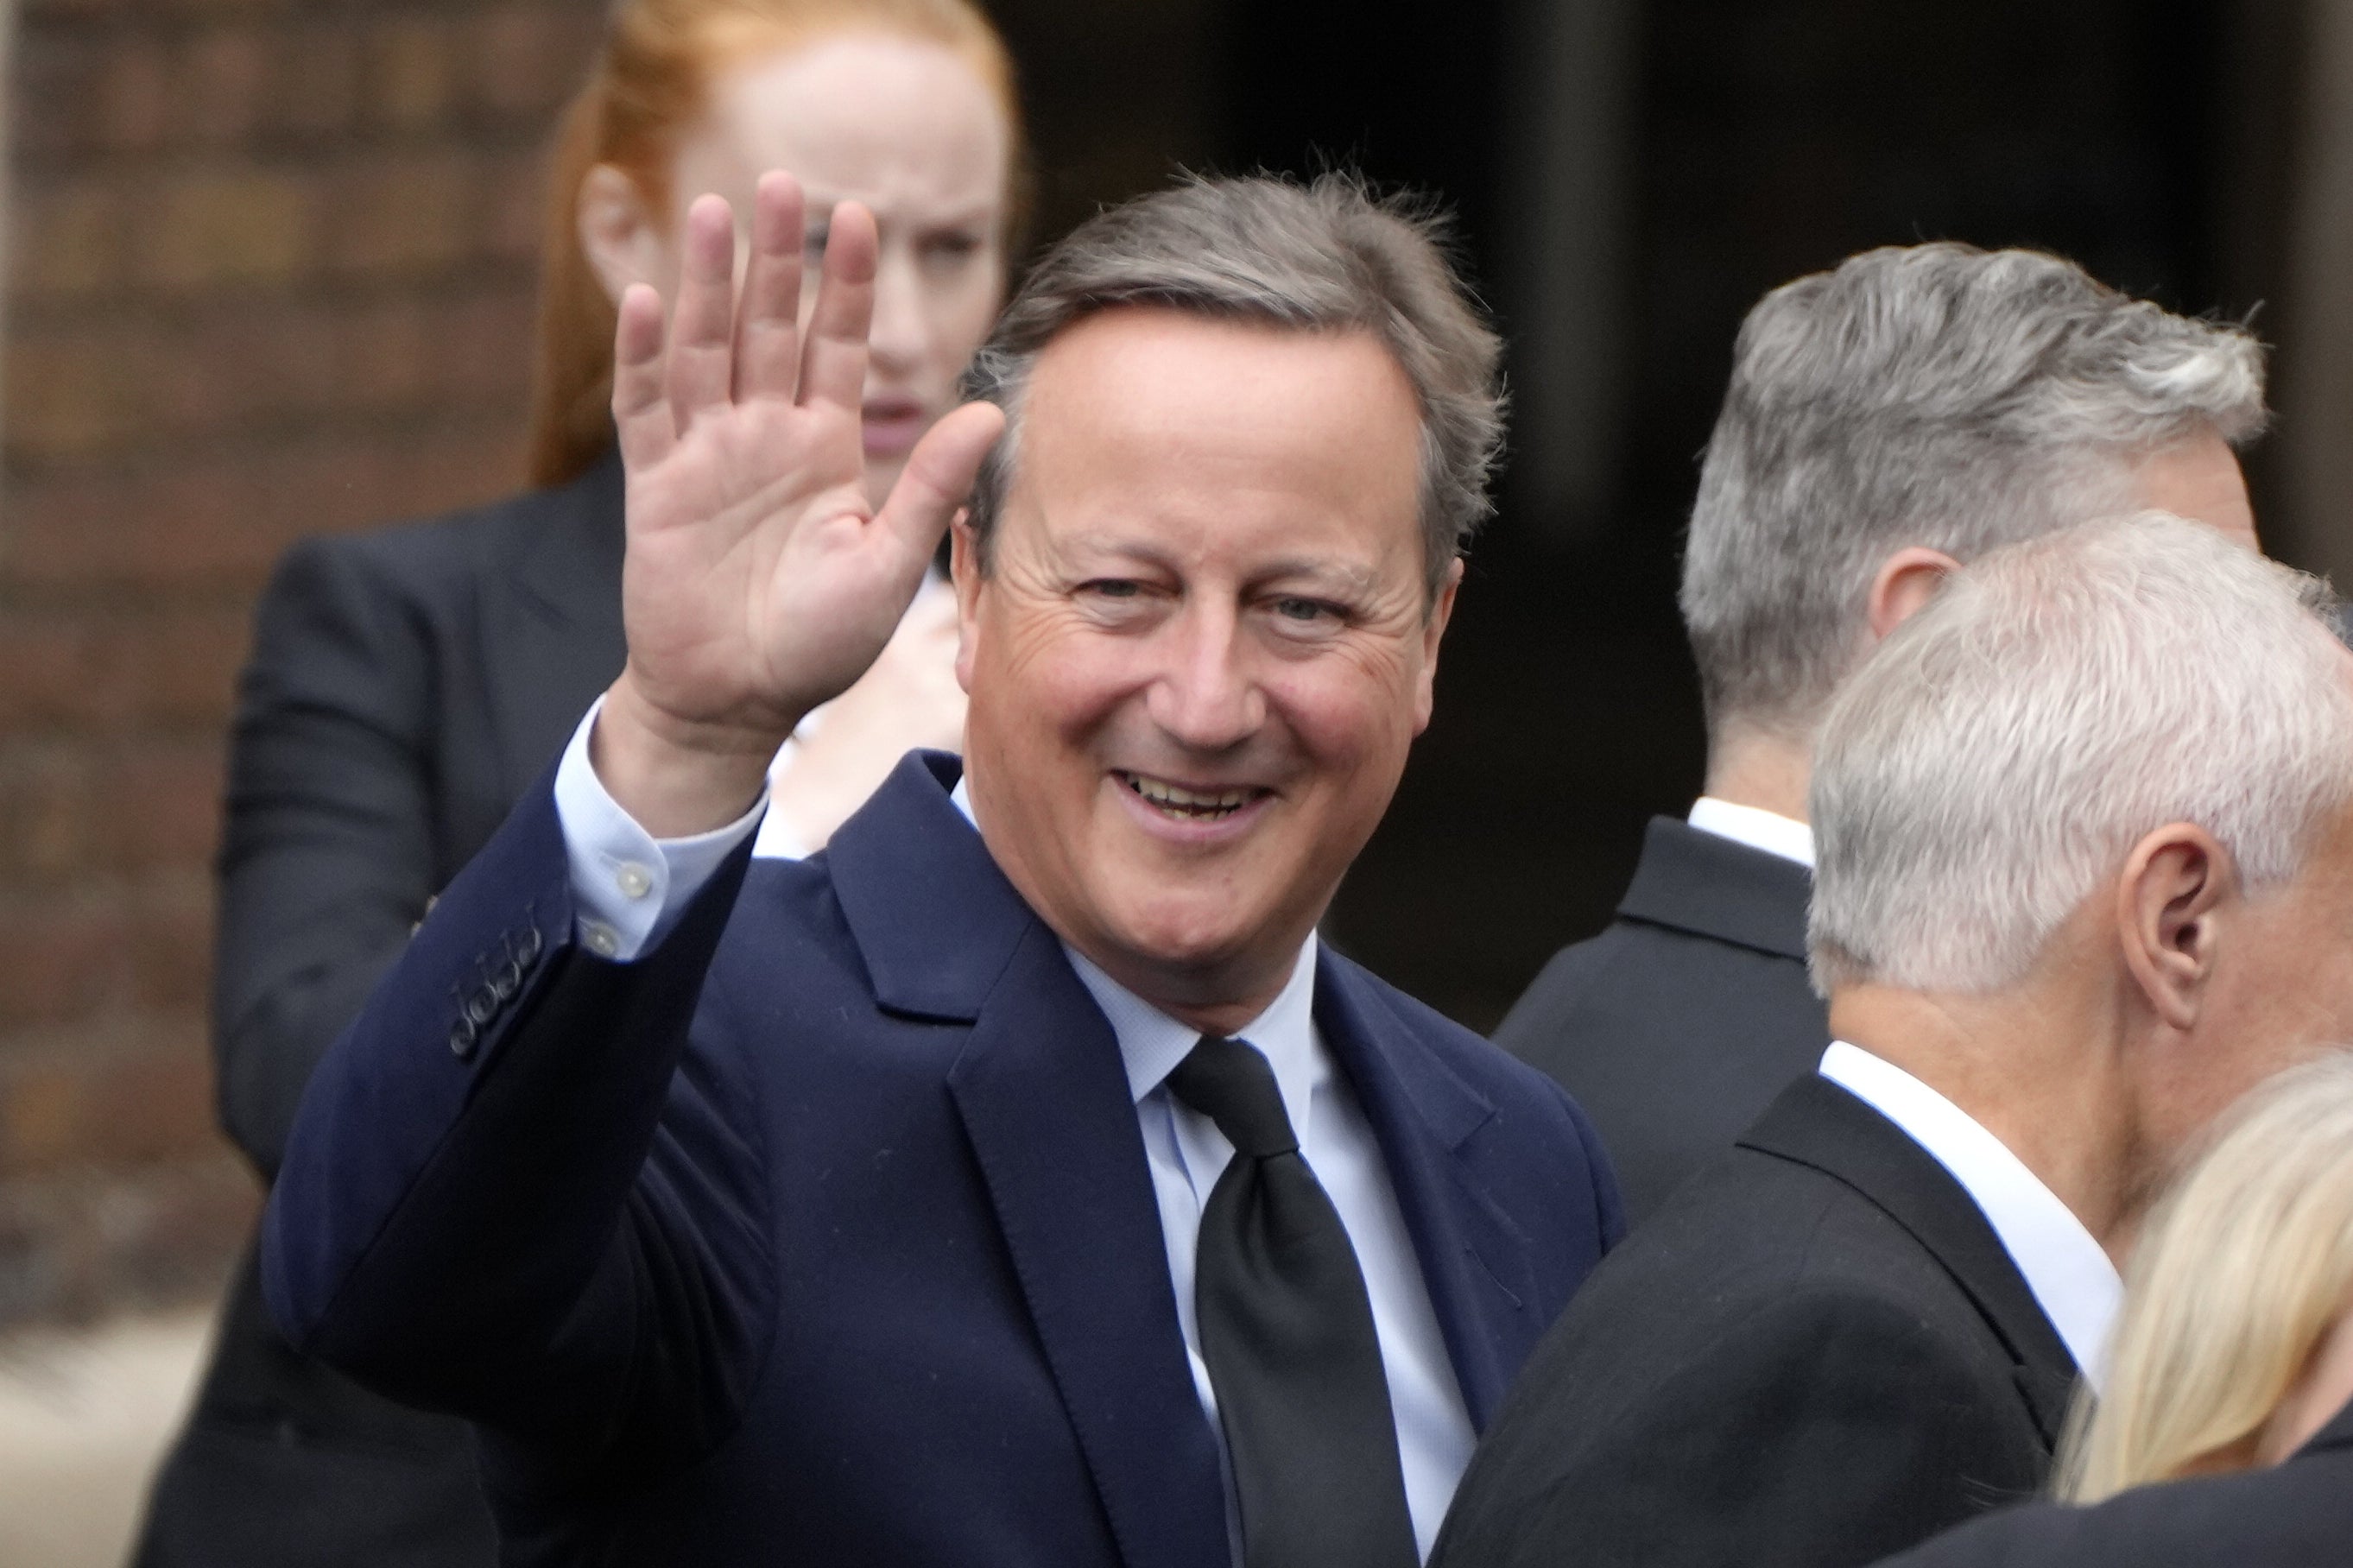 David Cameron leaves the ceremony (Kirsty Wigglesworth/PA)